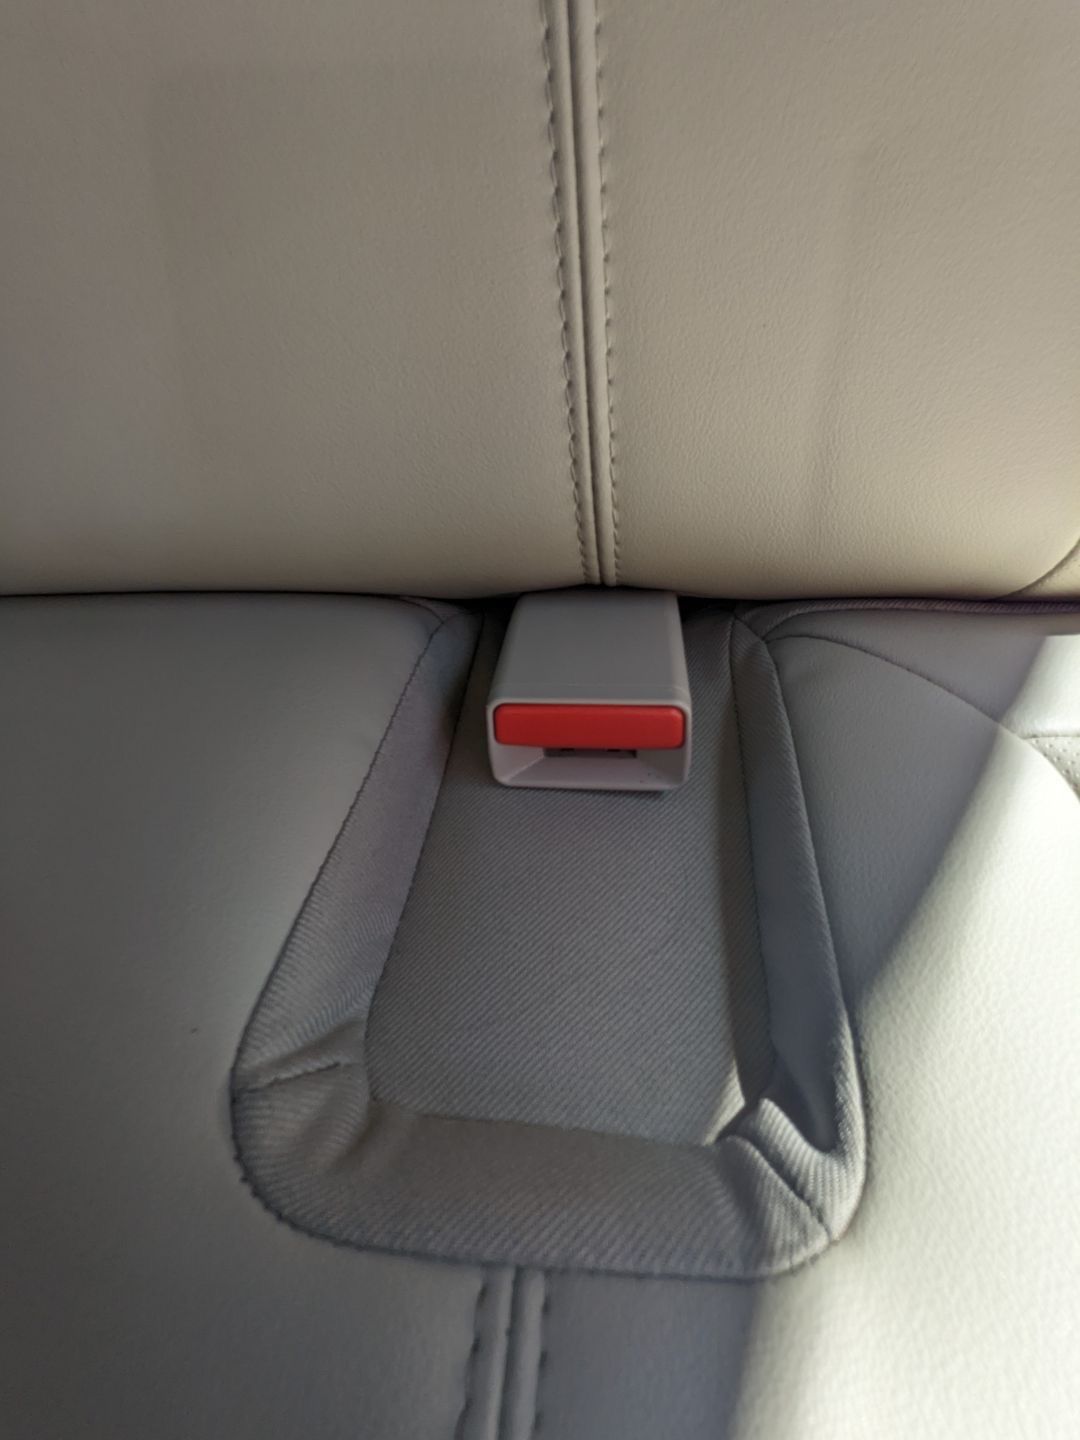 Clean Seatbelt Lock